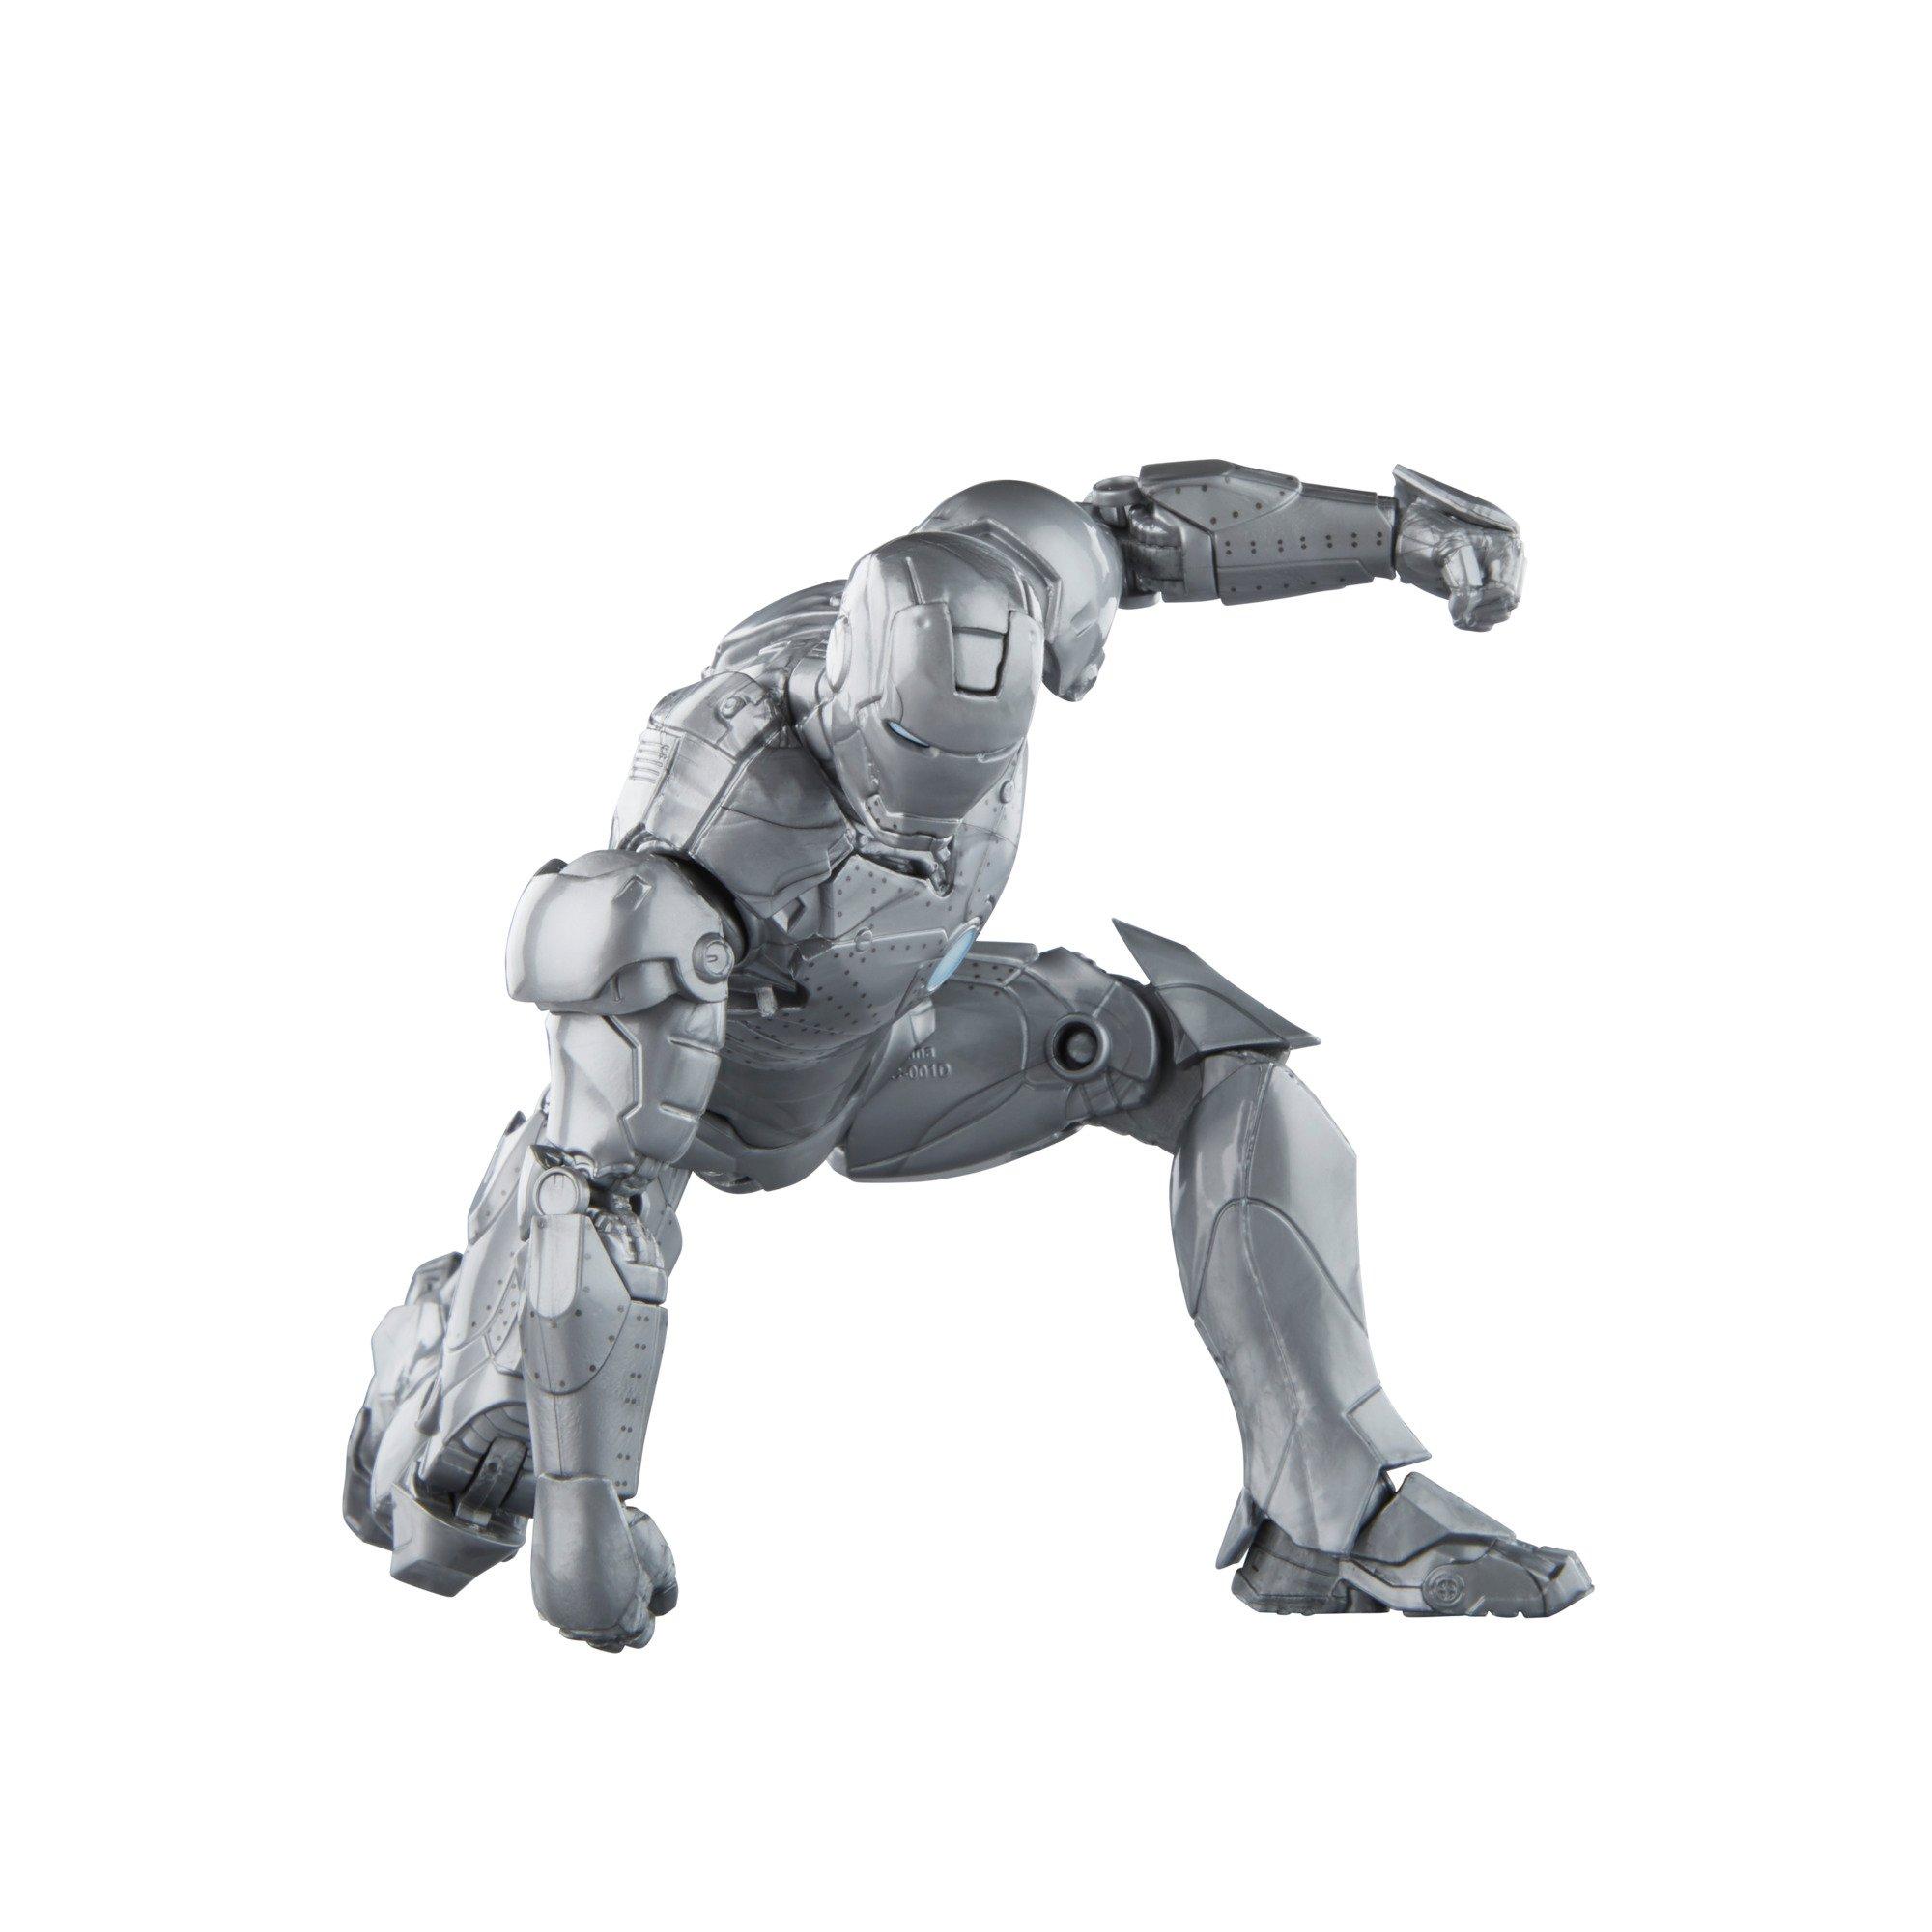 Hasbro Marvel Legend Series The Infinity Saga Iron Man Mark II 6-in Action Figure